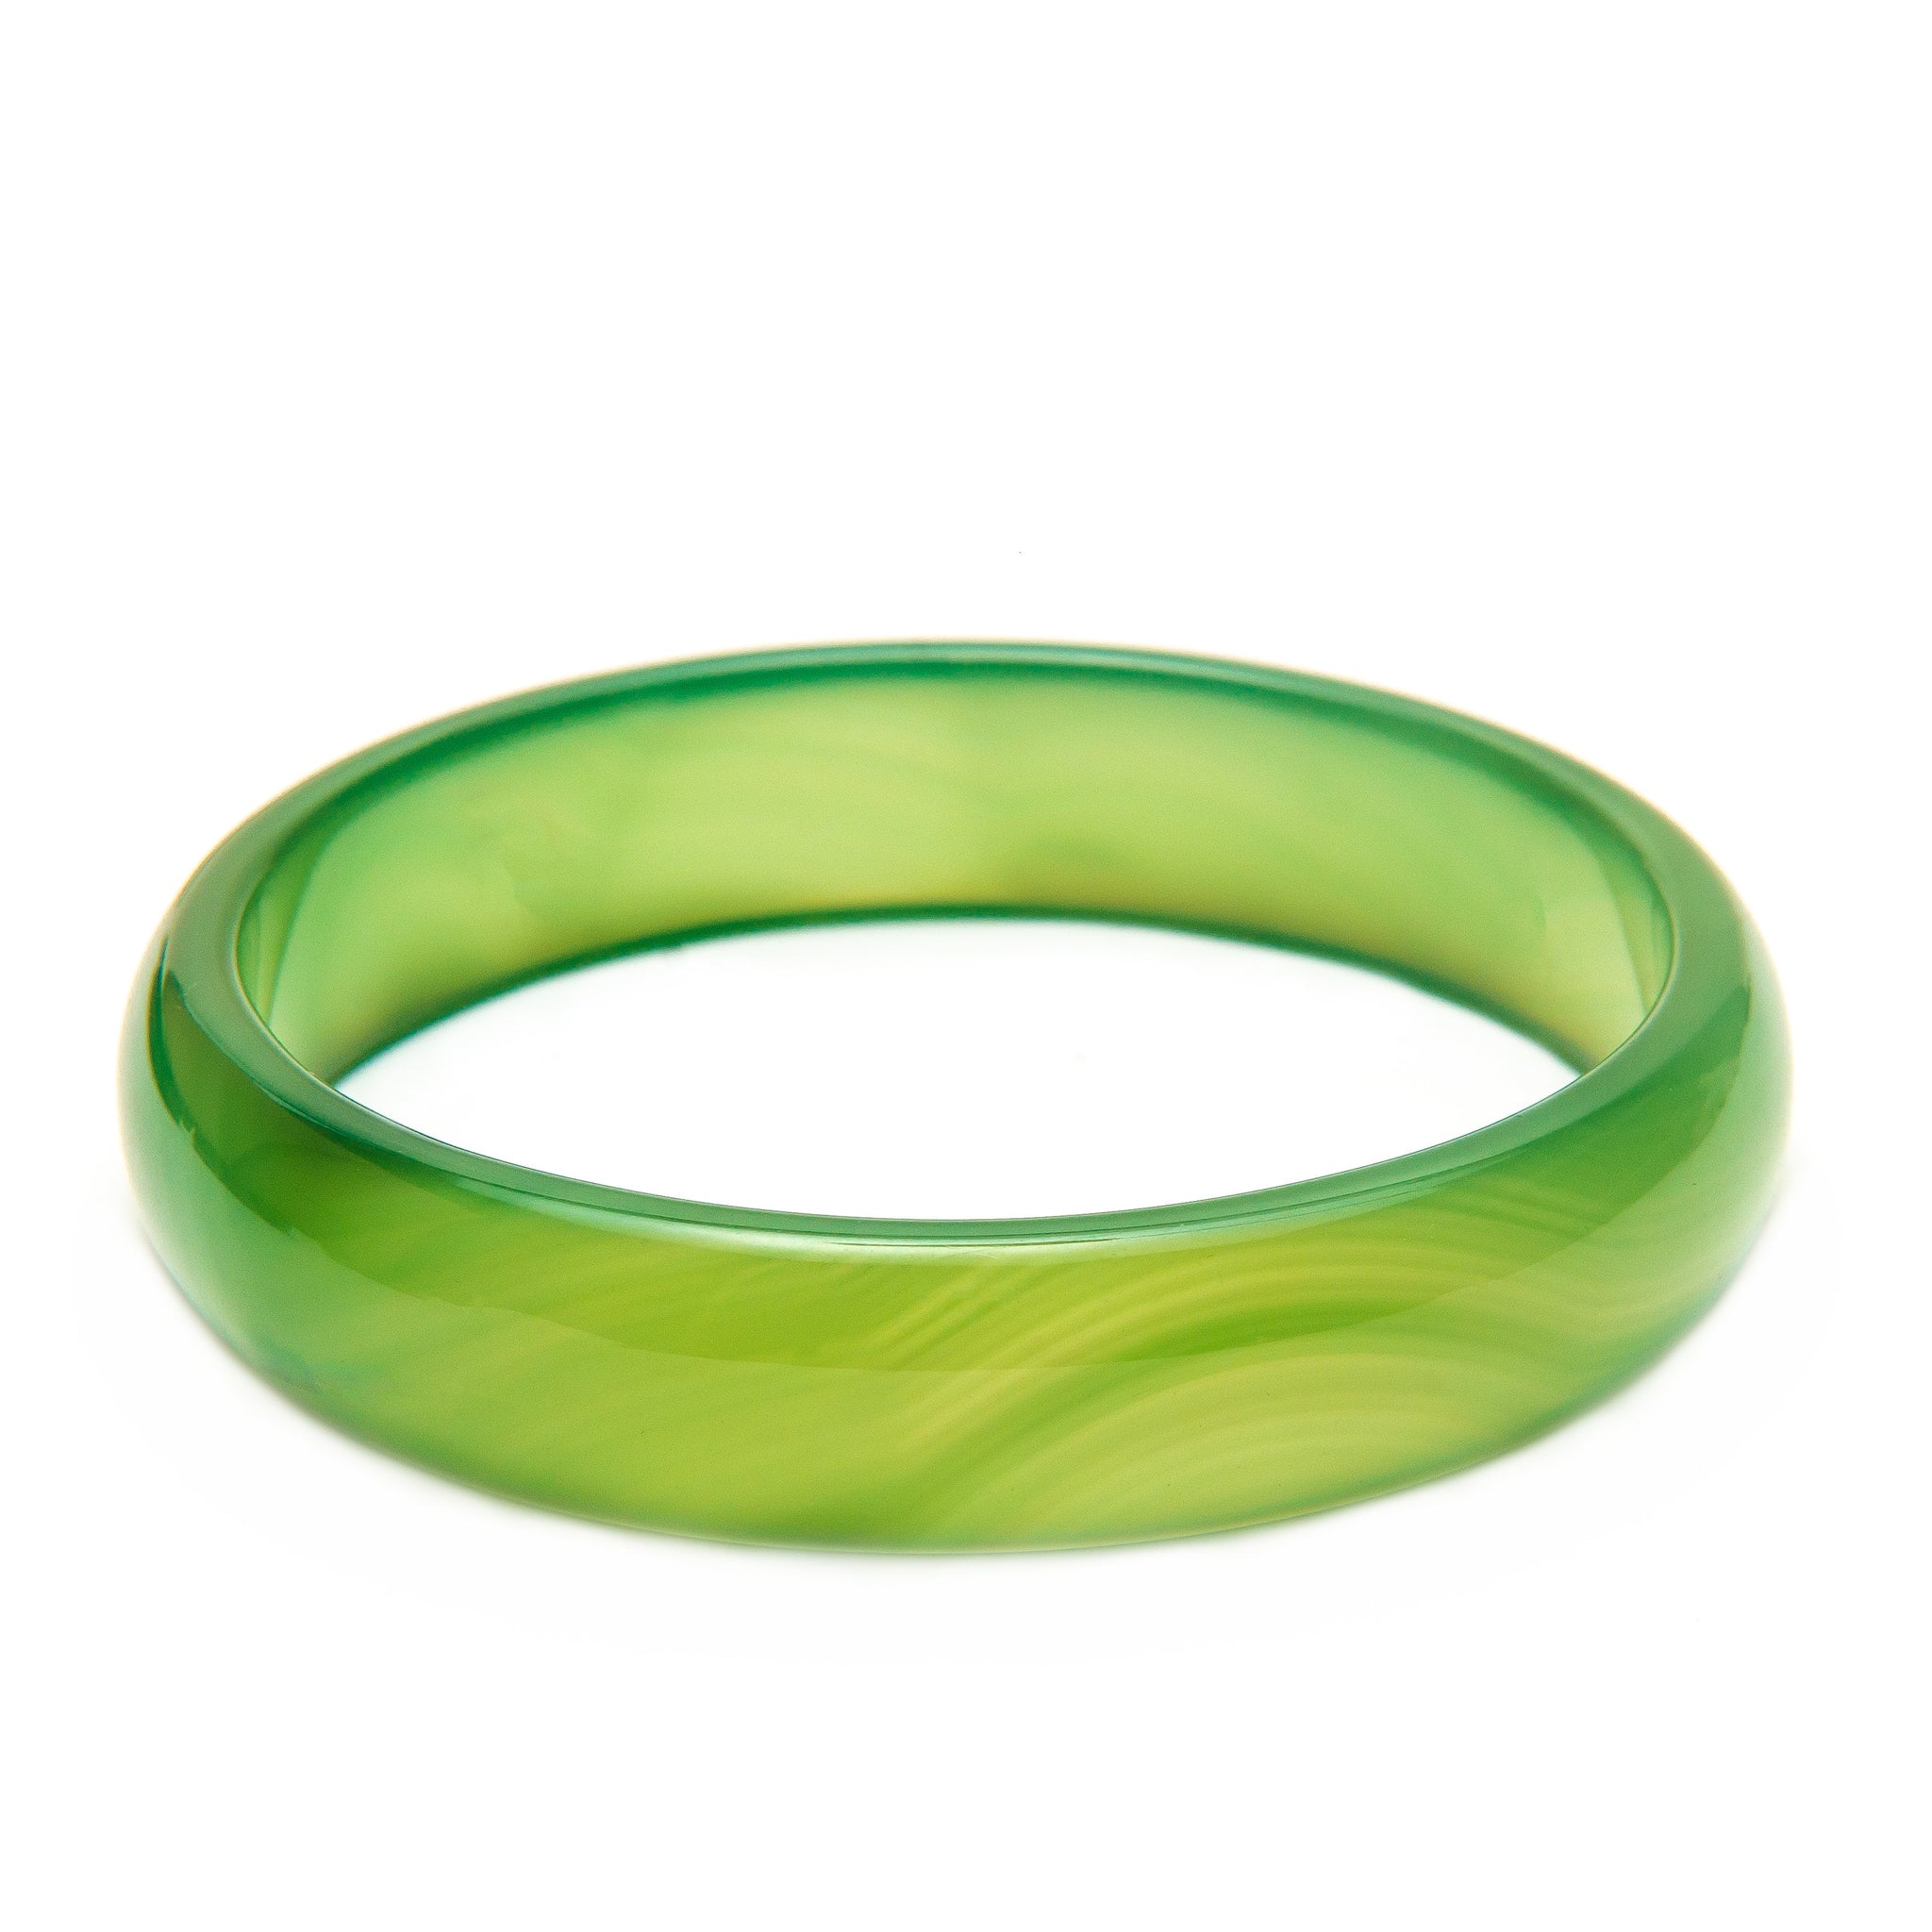 green agate bracelet